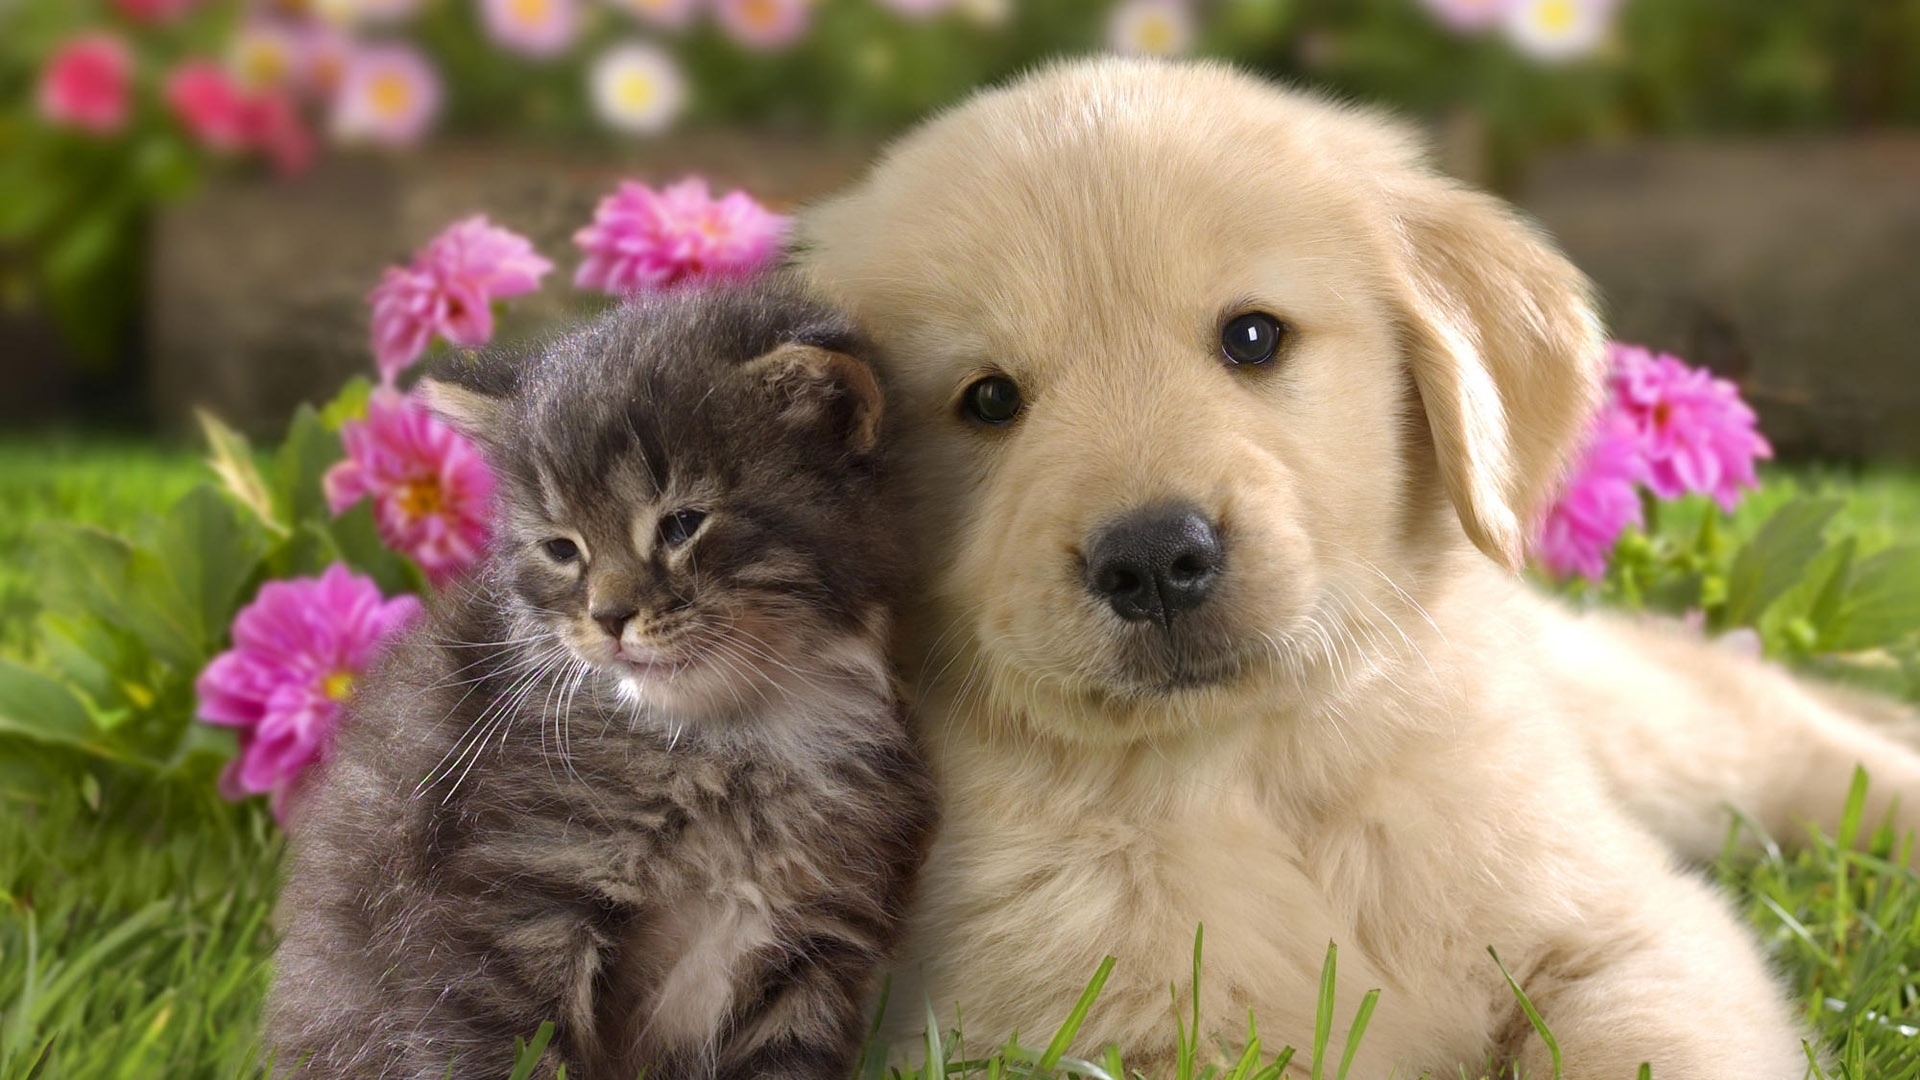 puppy_kitten_grass_flowers_couple_friendship_29330_1920x1080.jpg